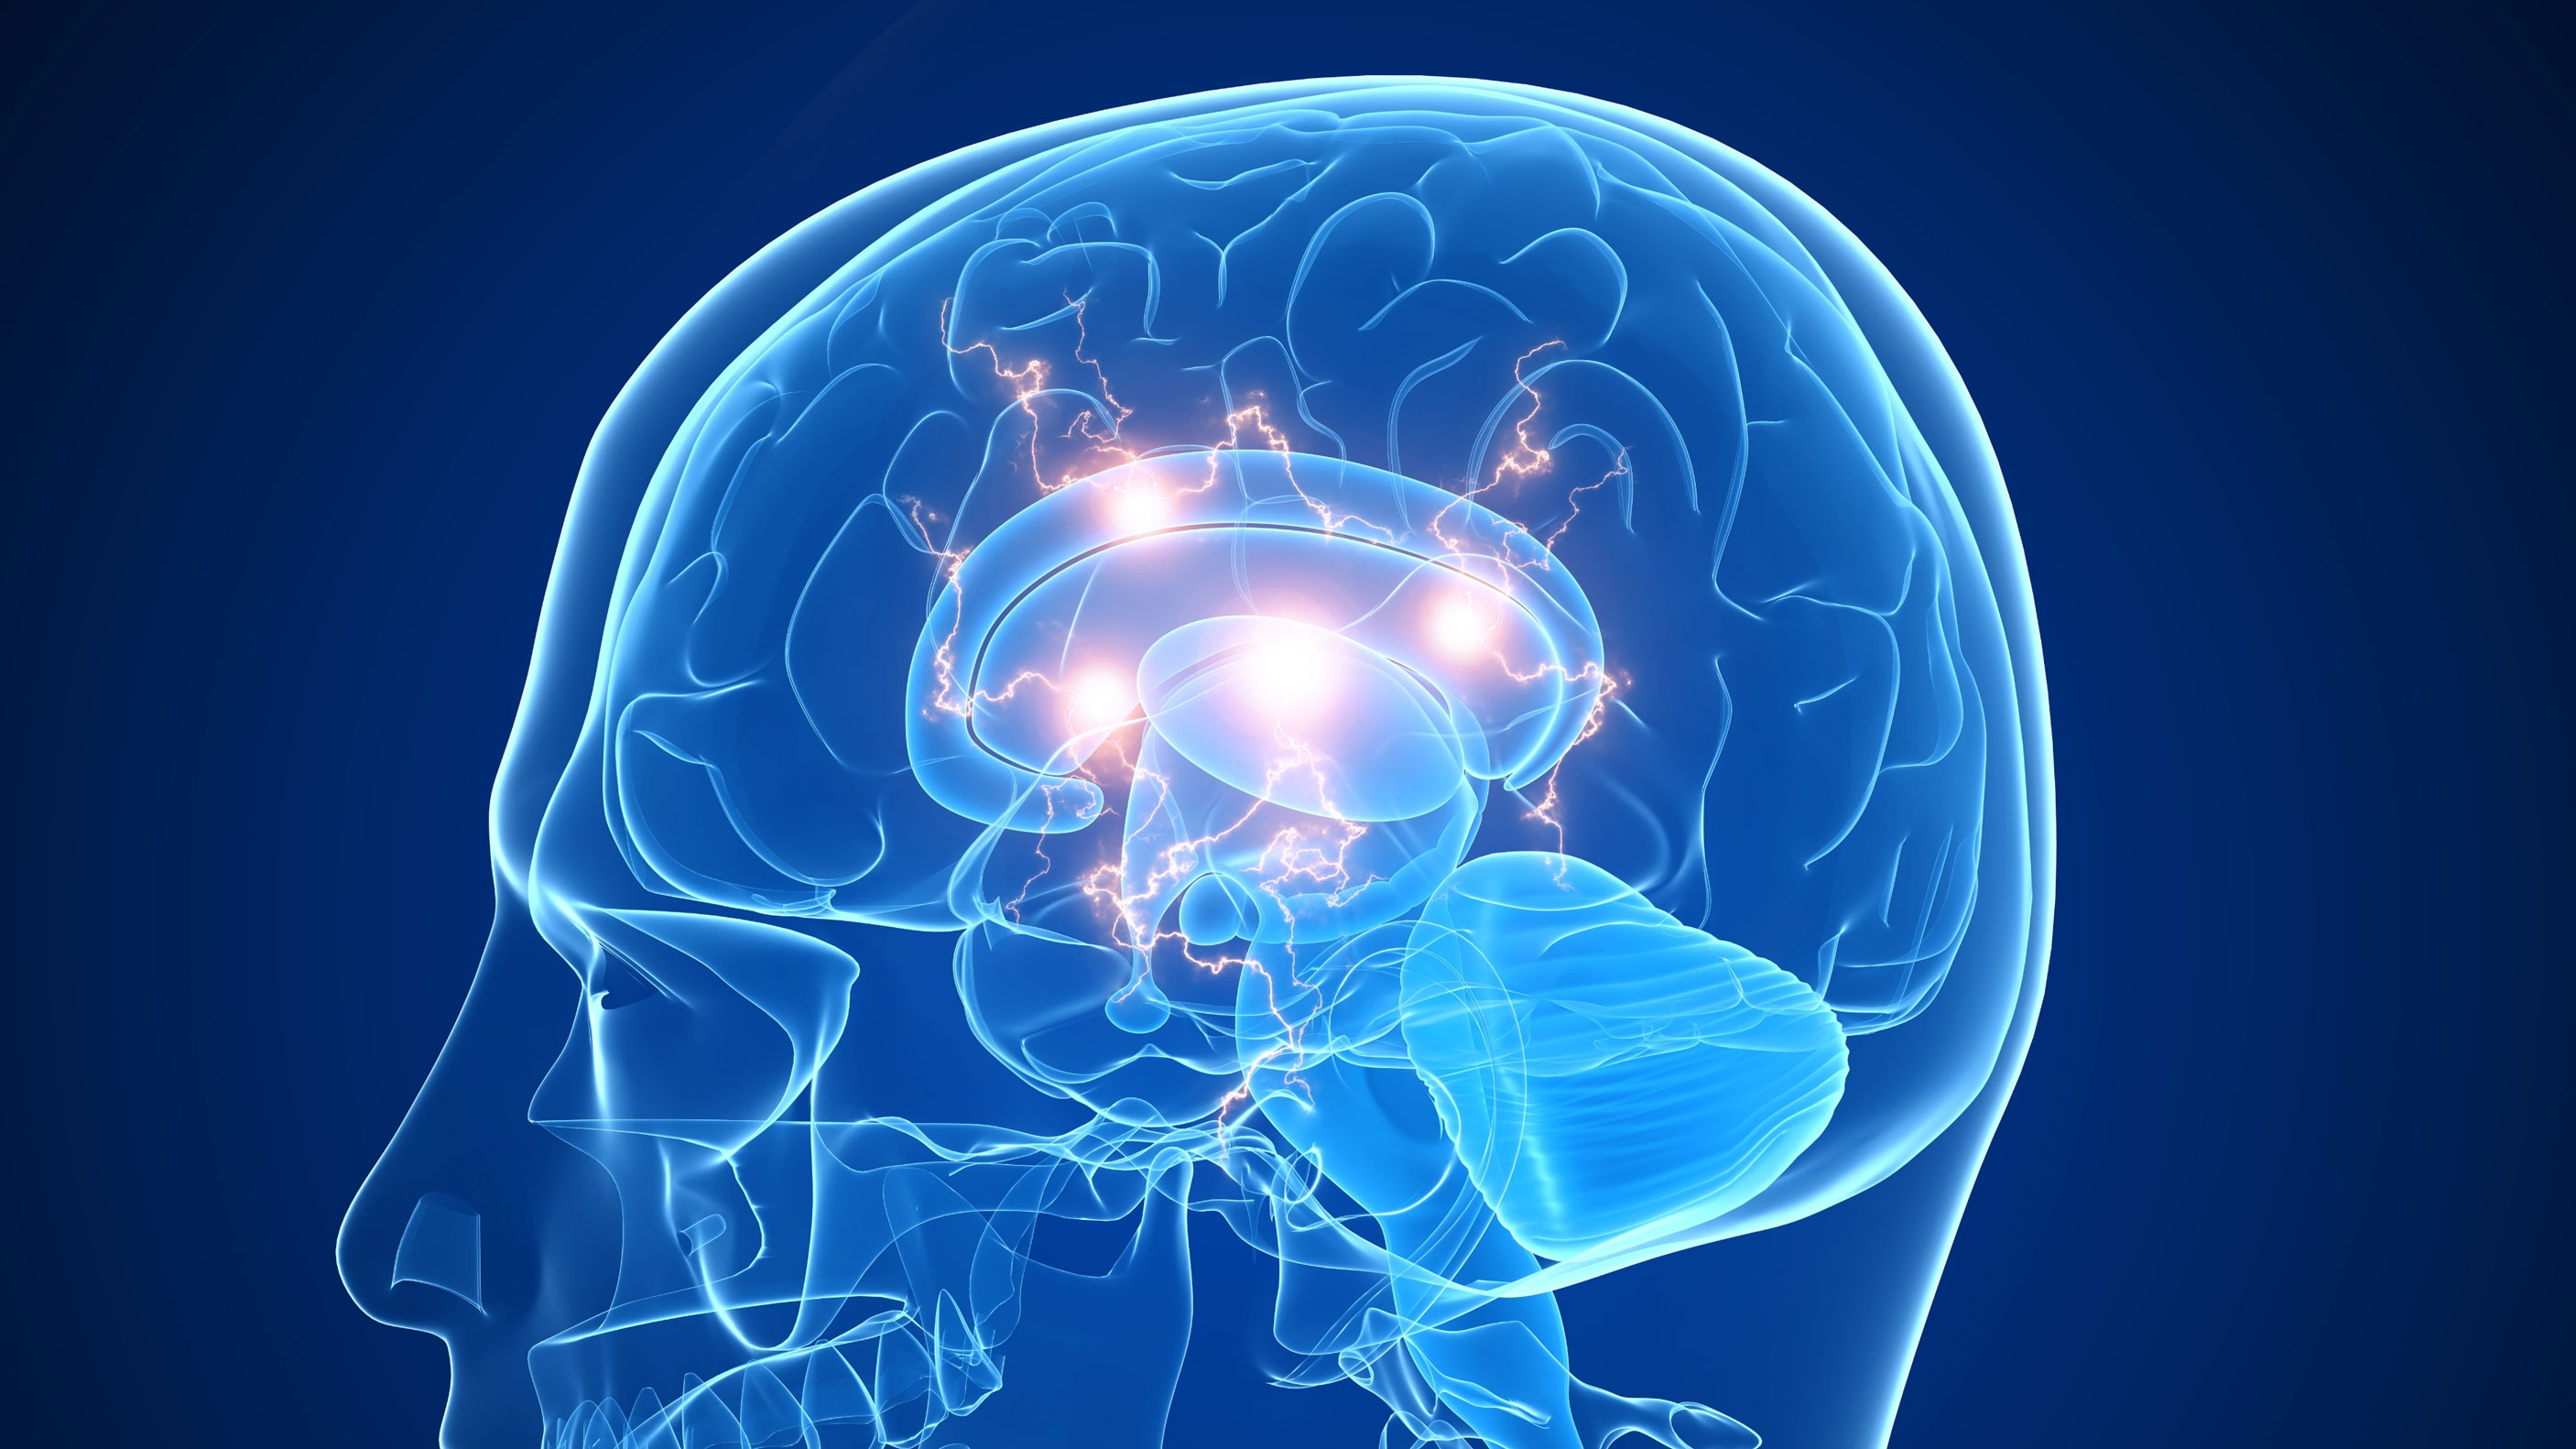 Brain 167. Изображение мозга человека.